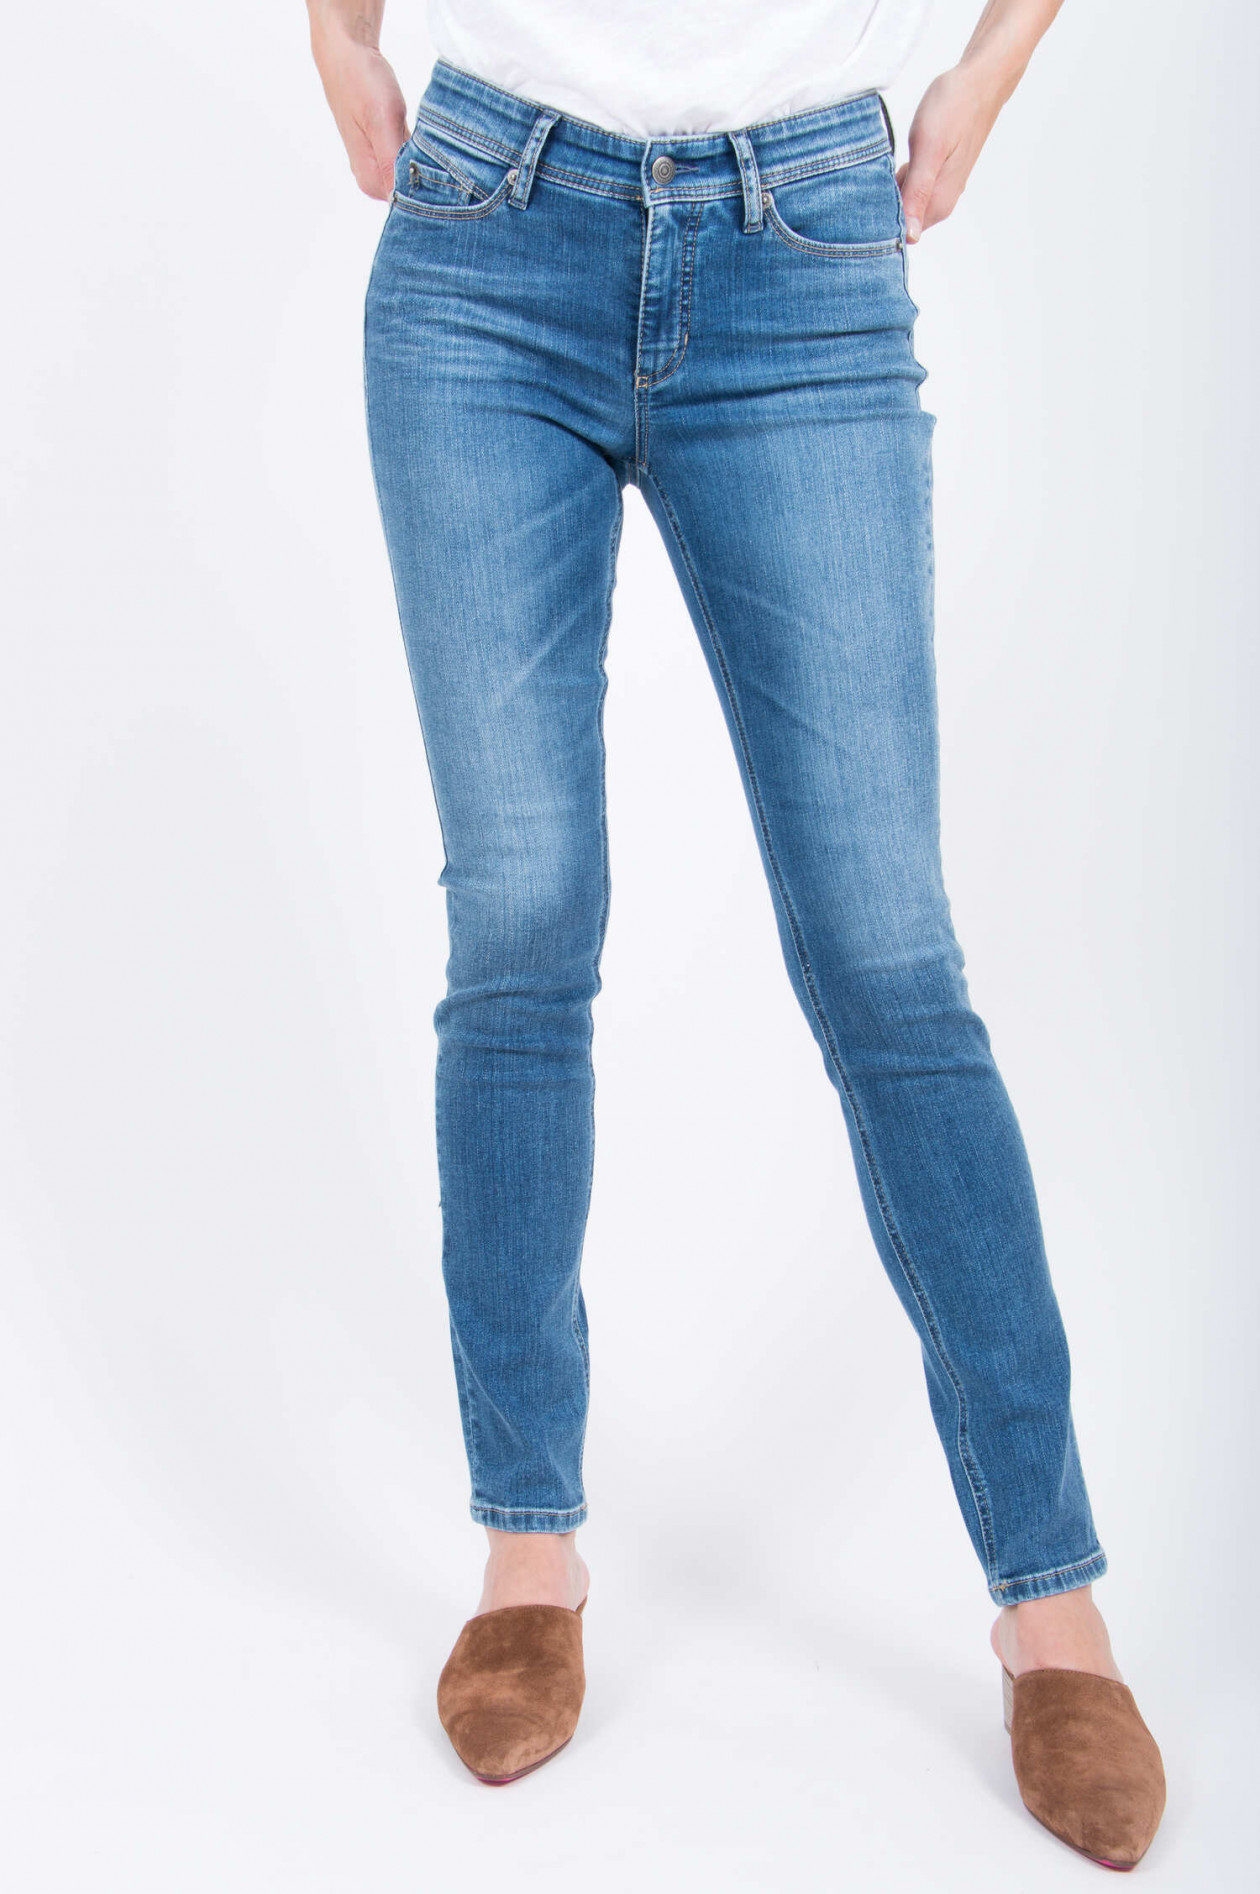 Cambio Jeans Parla Vintage Edition In Mittelblau Gruener At